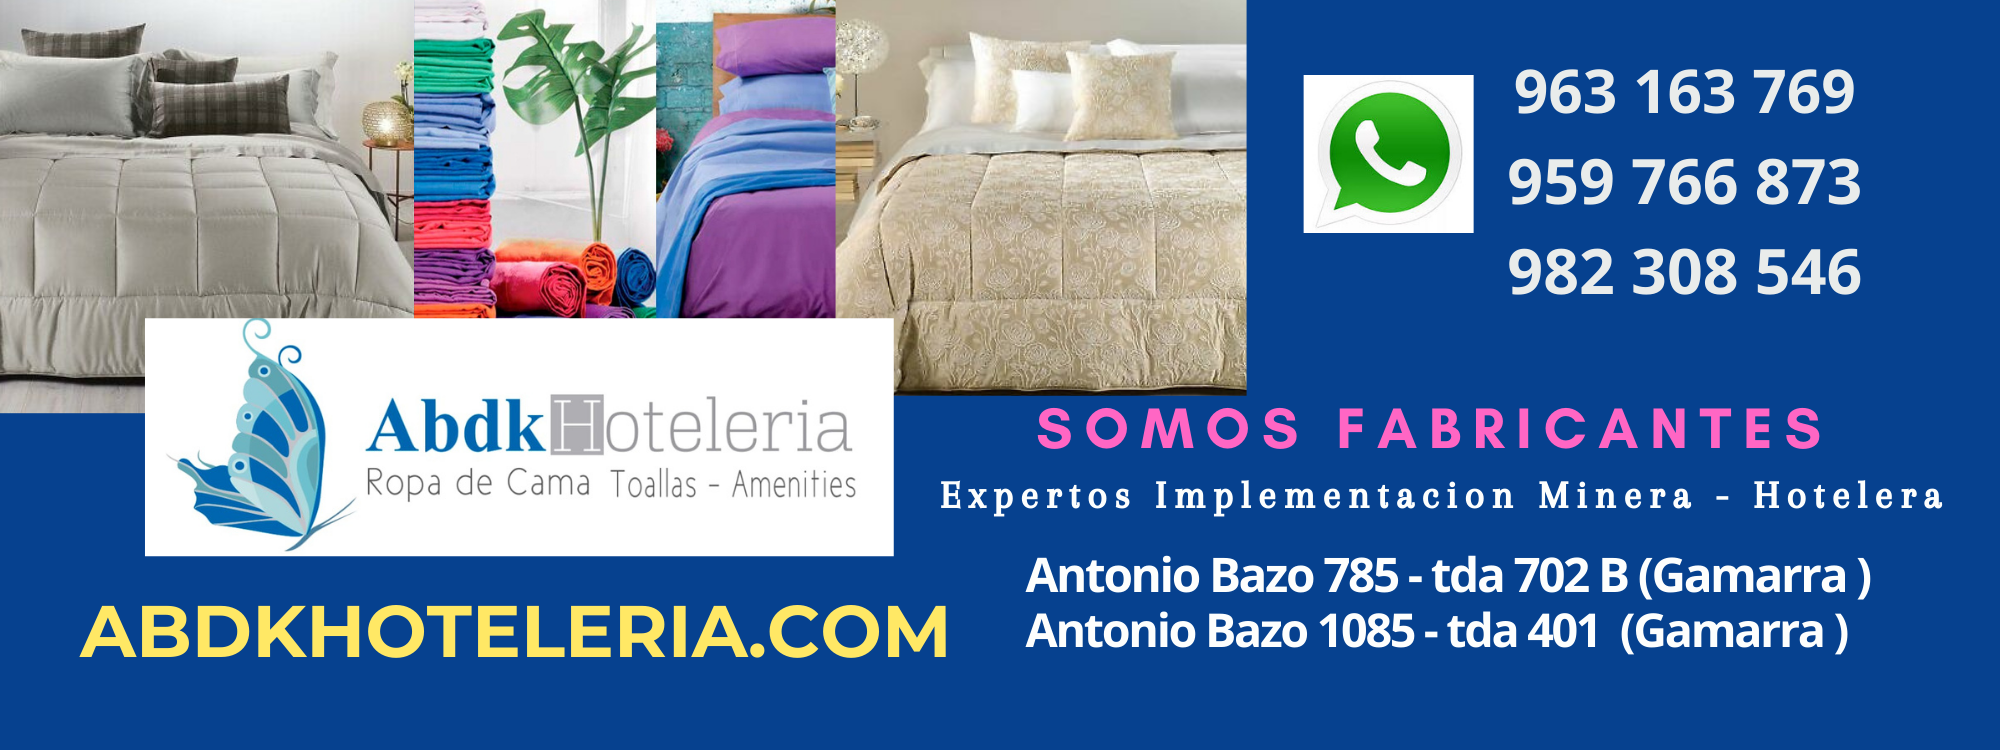 EDREDONES & PERU - ABDK HOTELERIA Ropa de cama, sabanas, toallas jabones Hoteleros